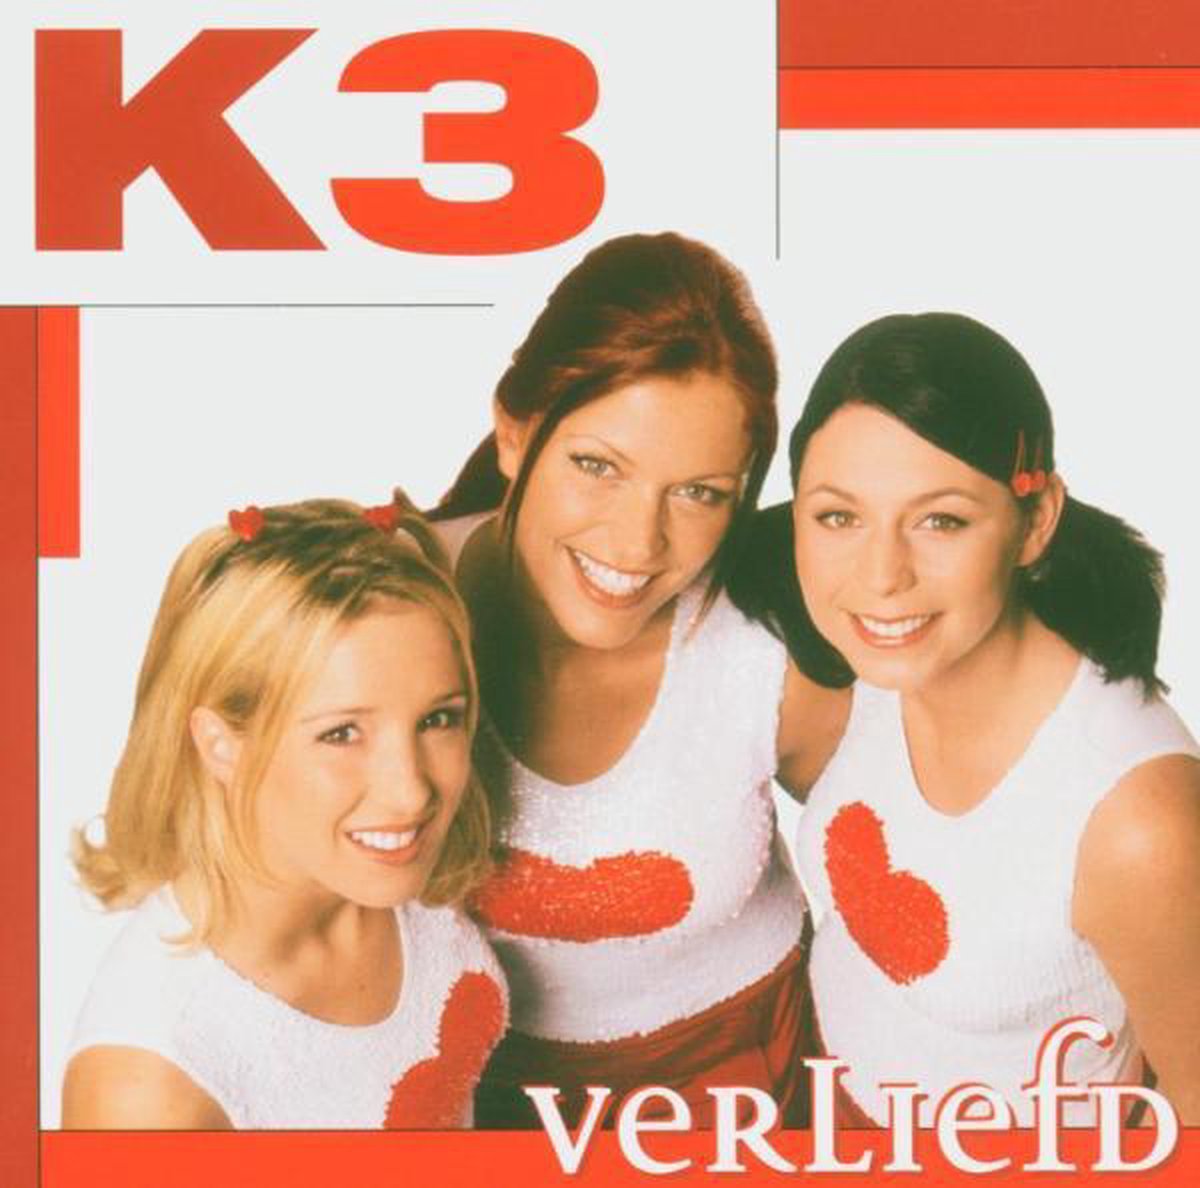 Verliefd (CD), K3 | CD (album) | Muziek | bol.com